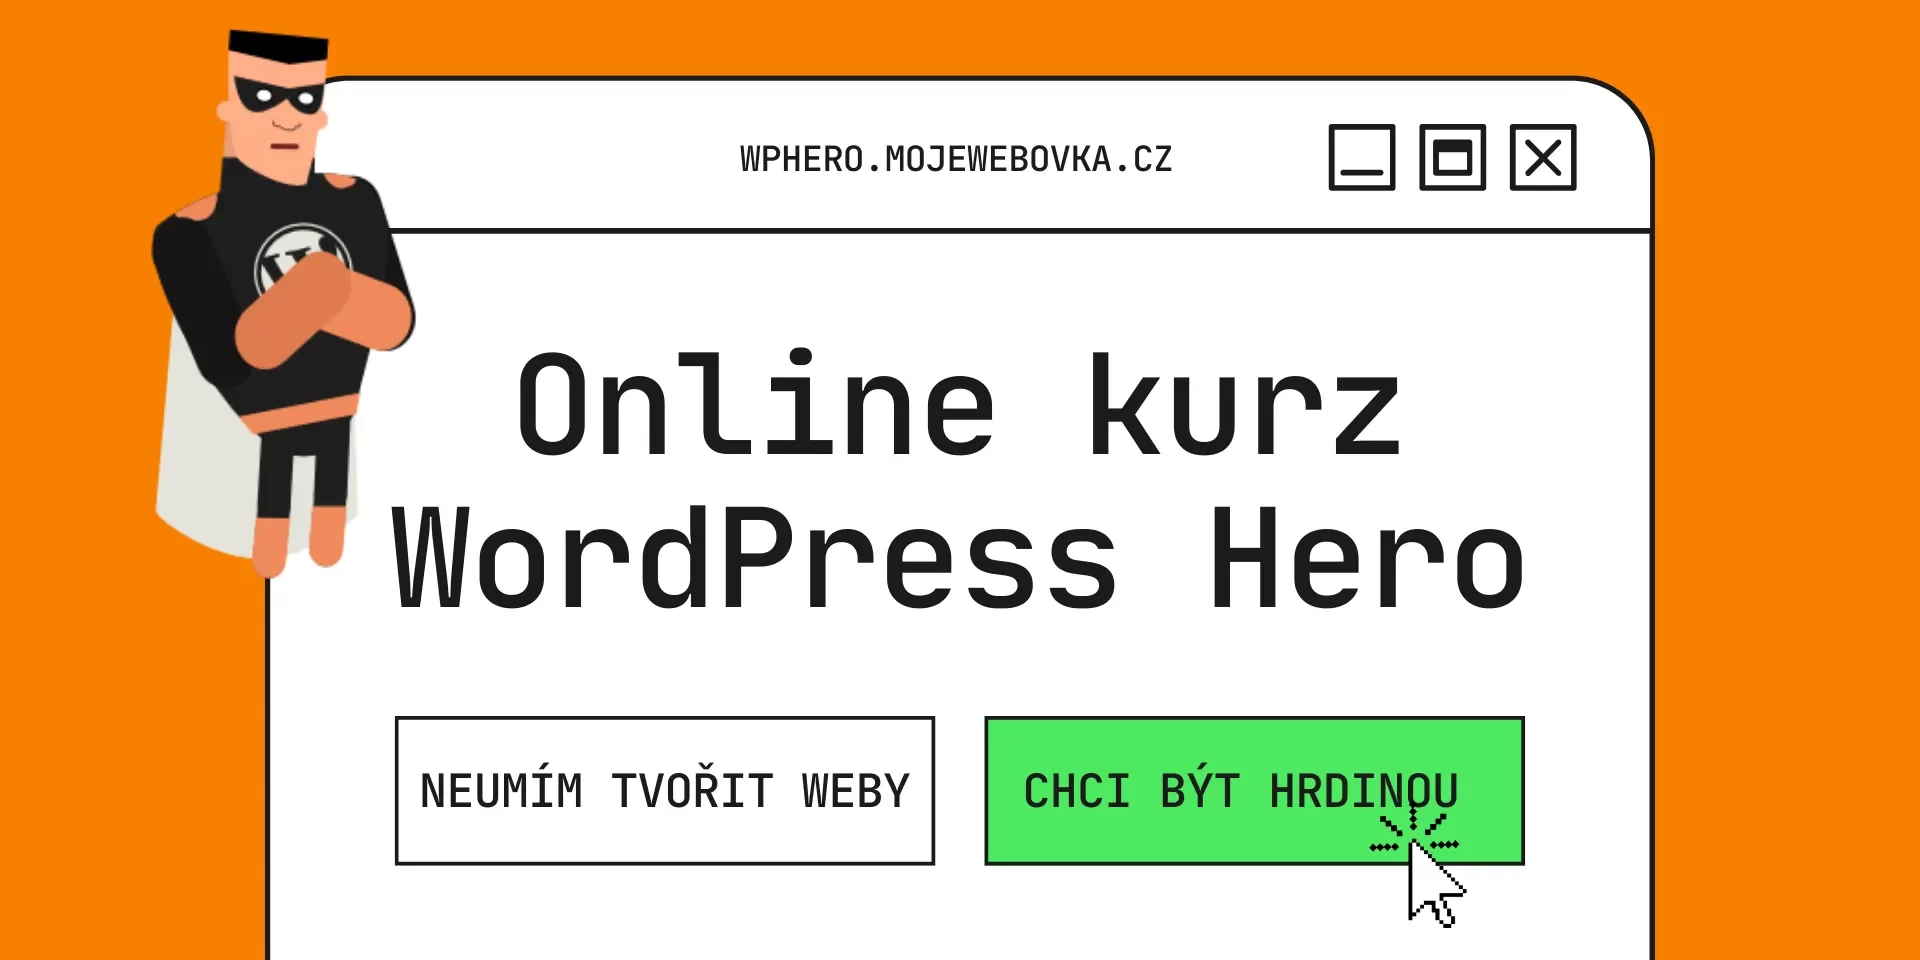 Online kurz WordPress Hero